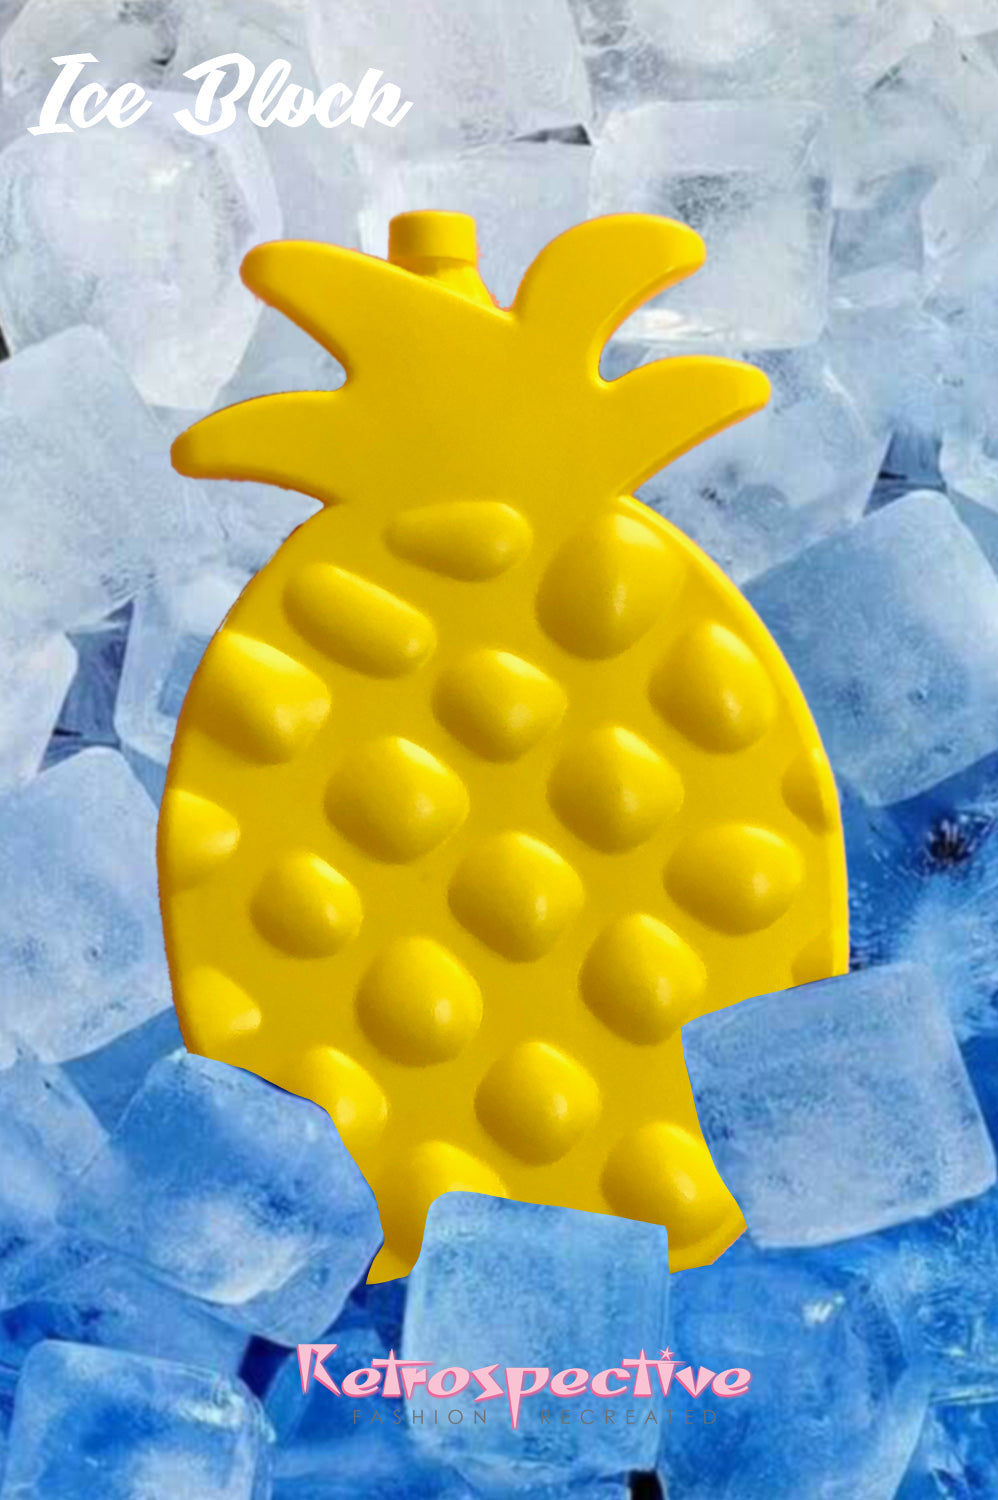 Pineapple ice Block